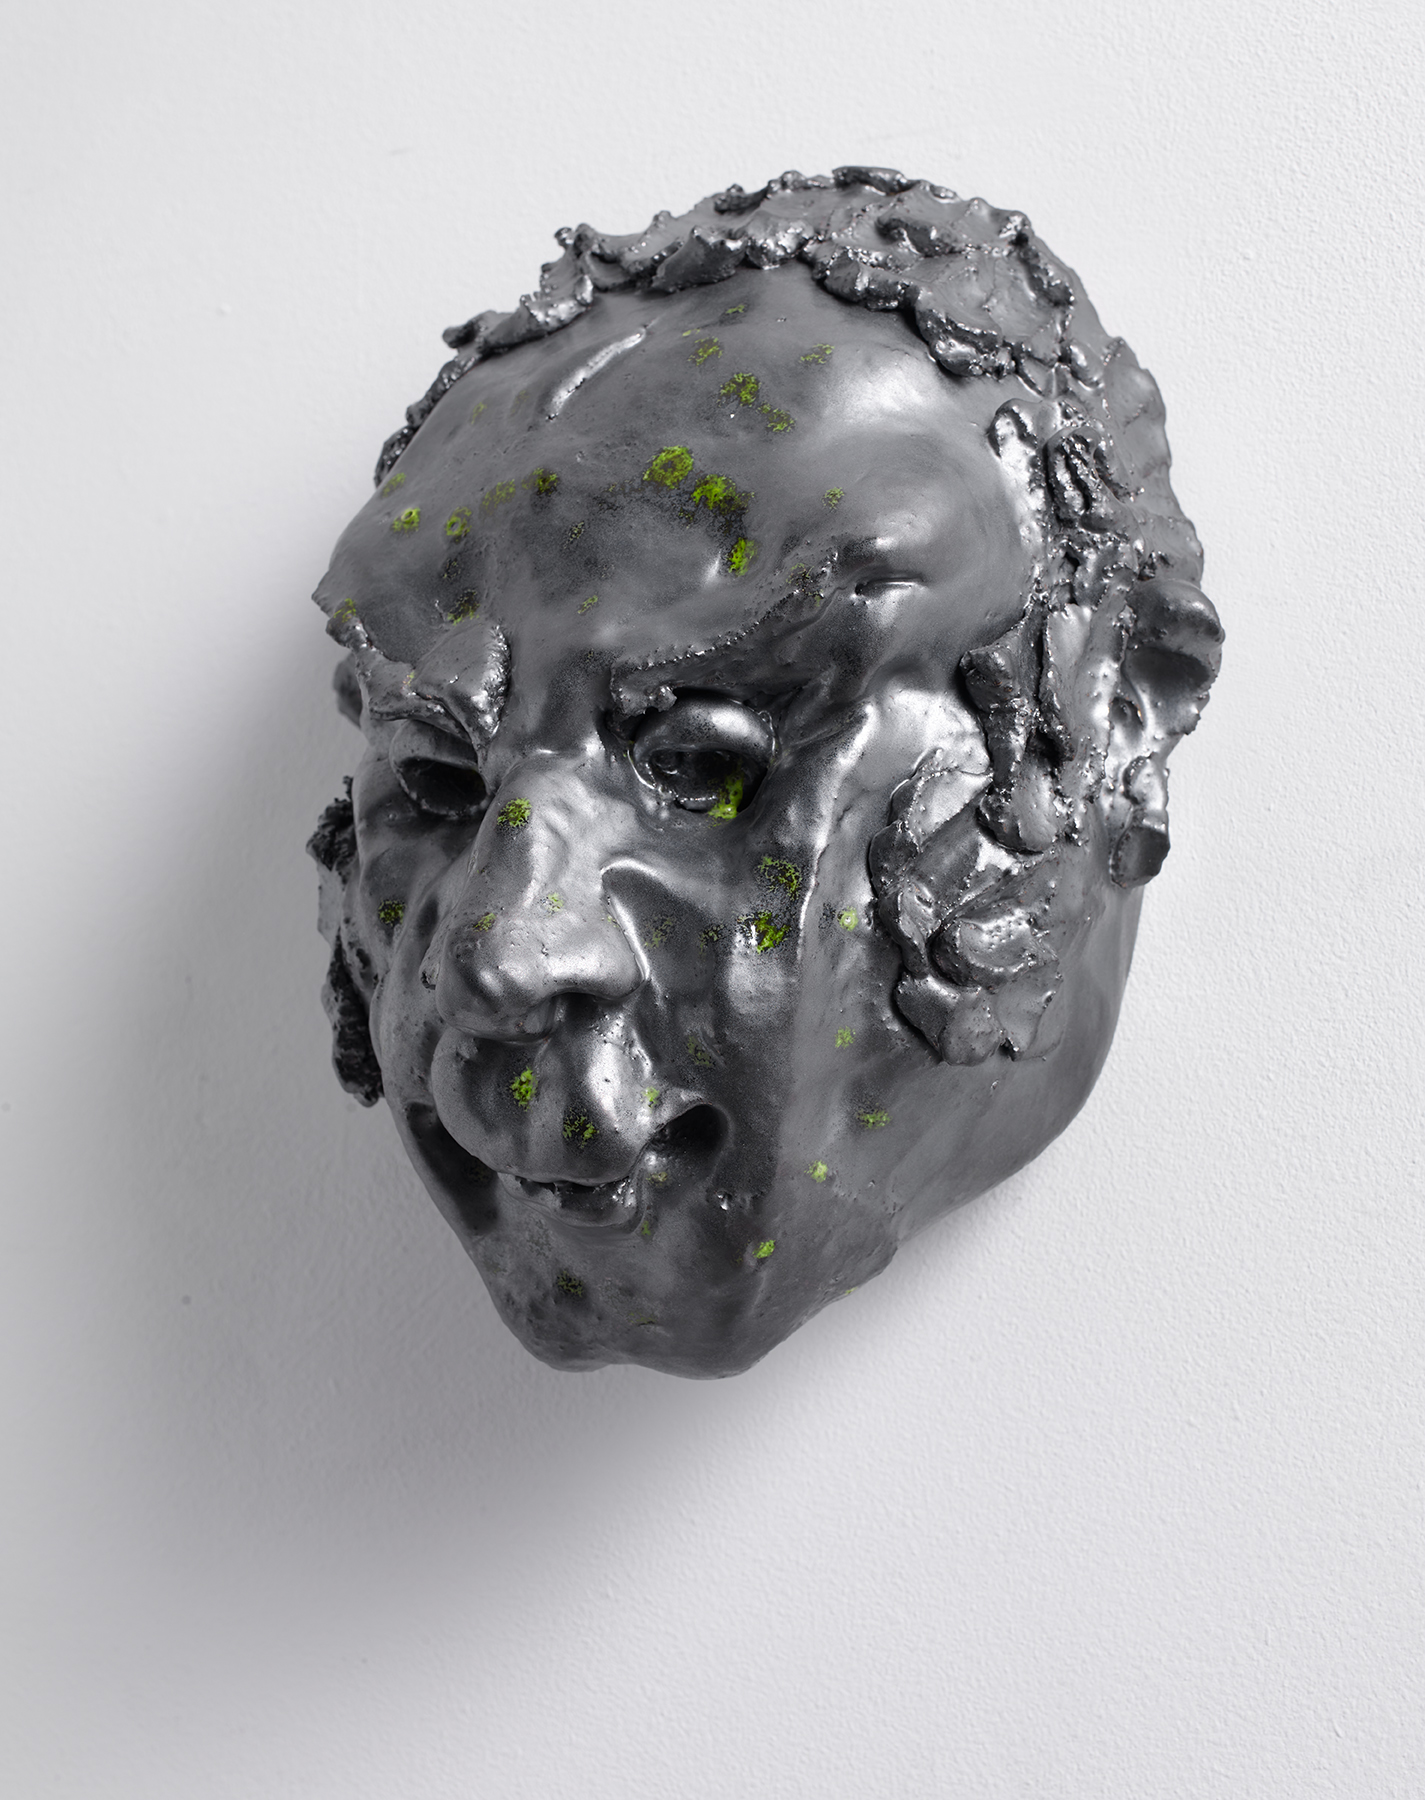 Thomas Schutte's ceramic sculpture Basler Mask (No. 11)